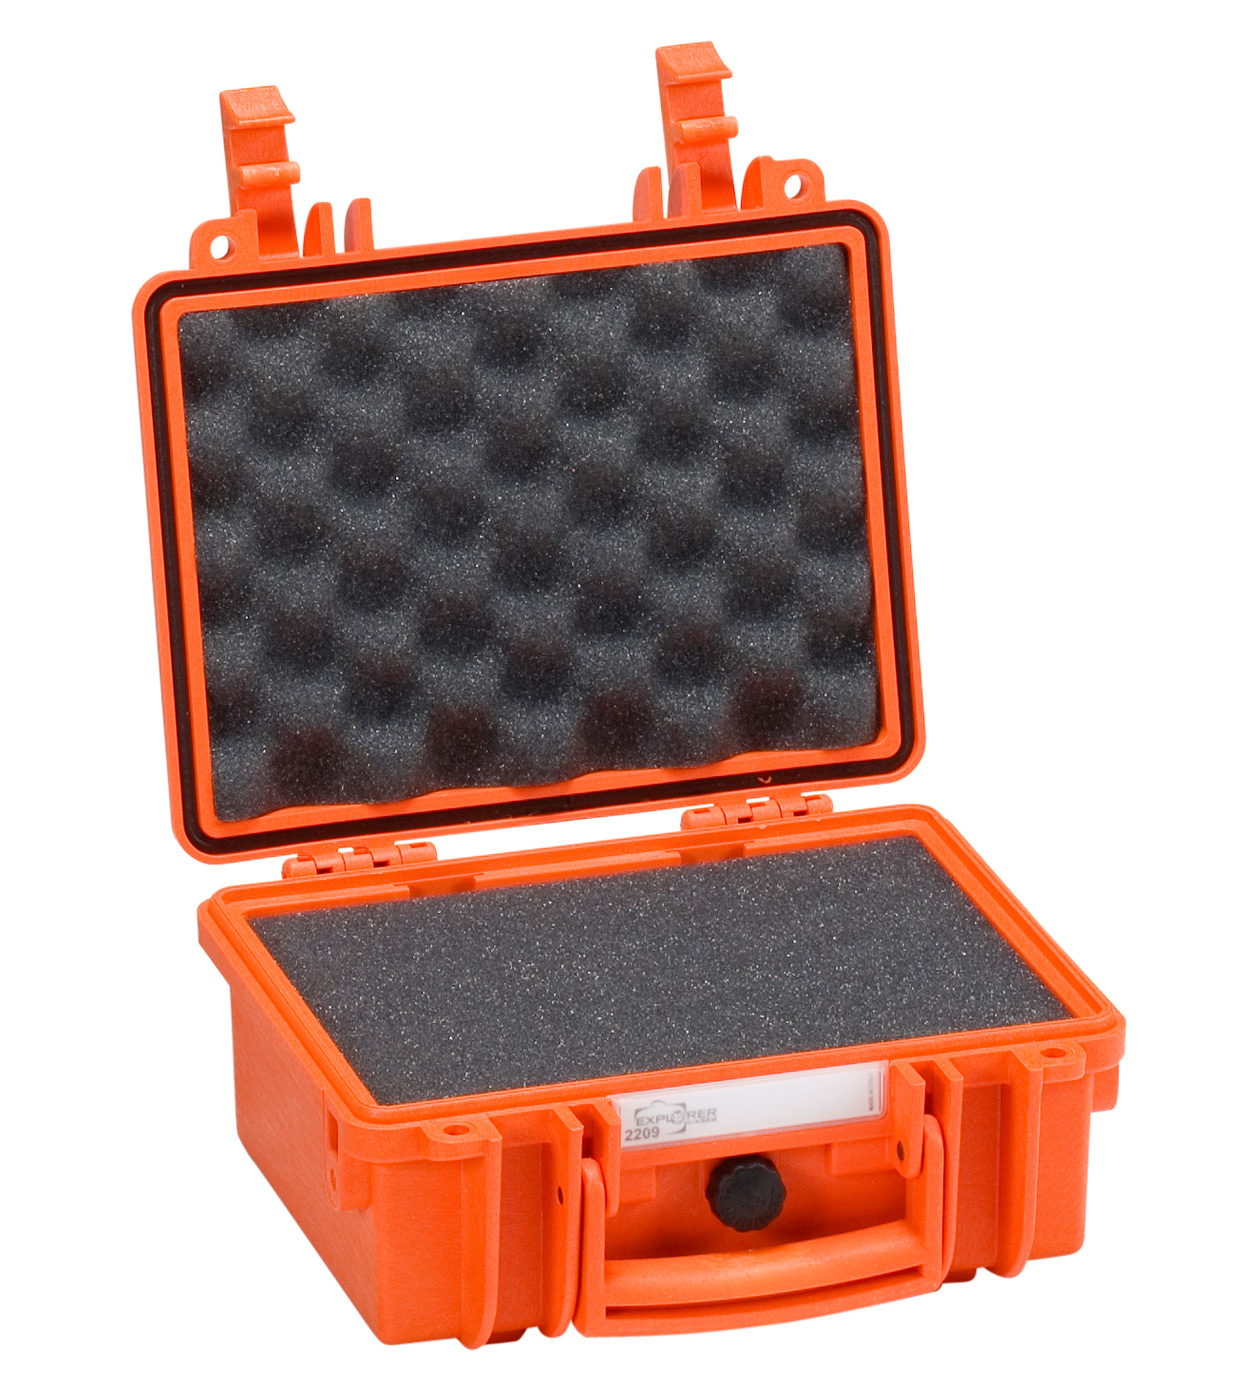 Maleta Explorer Cases 2209 color naranja | Maletas Estancas